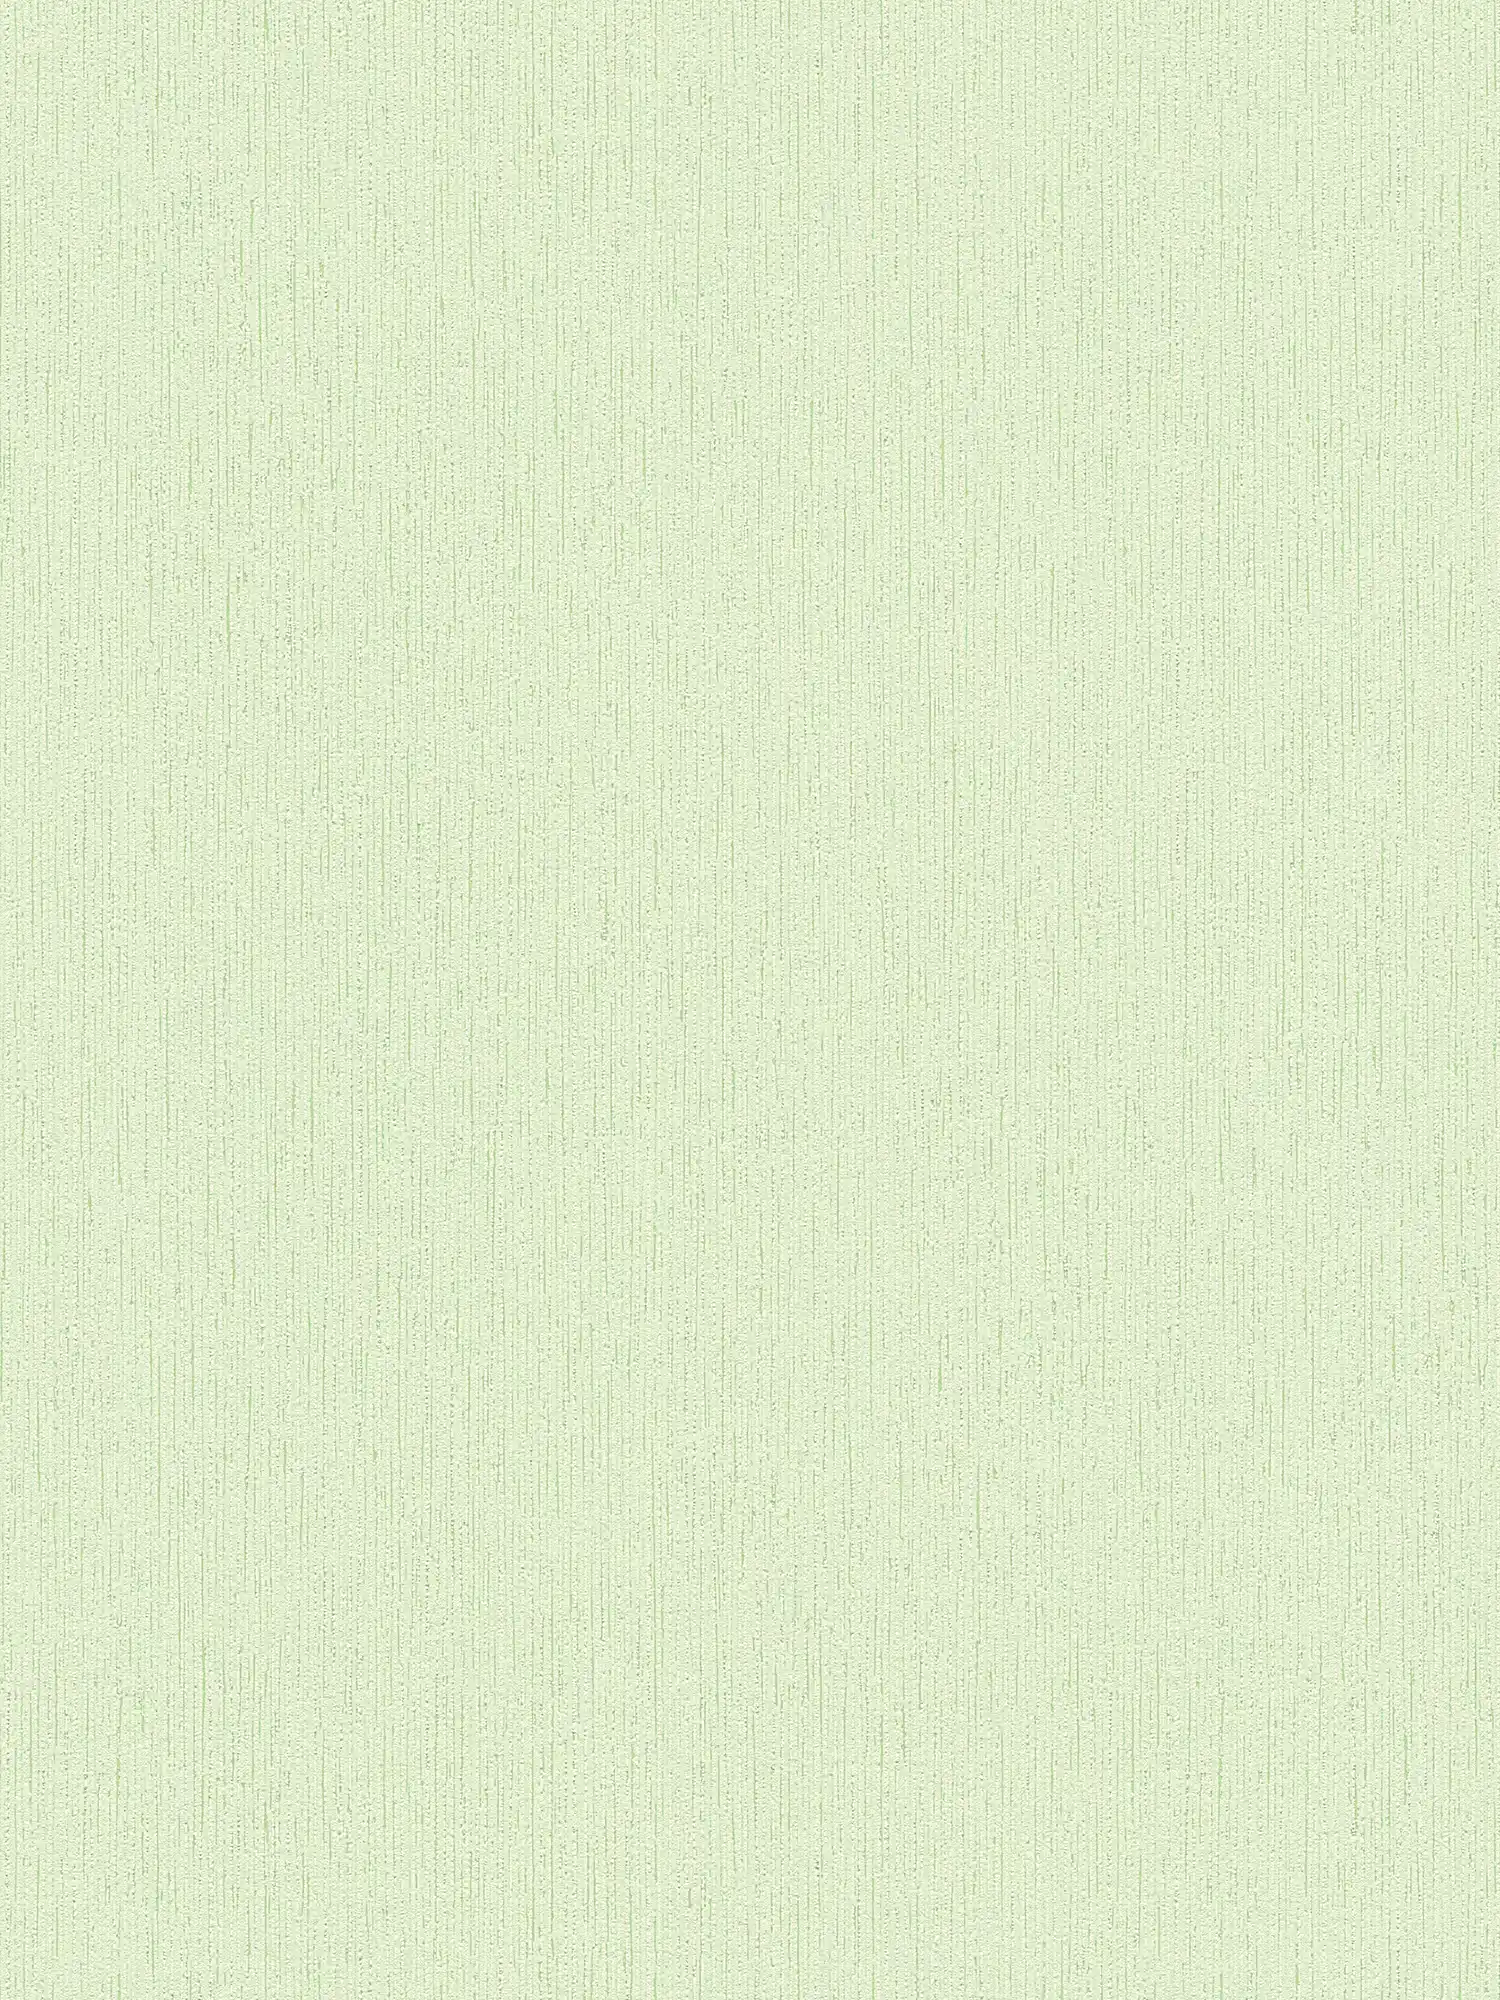 Hellgrüne Tapete Putzoptik & Strukturoberfläche - Grün
